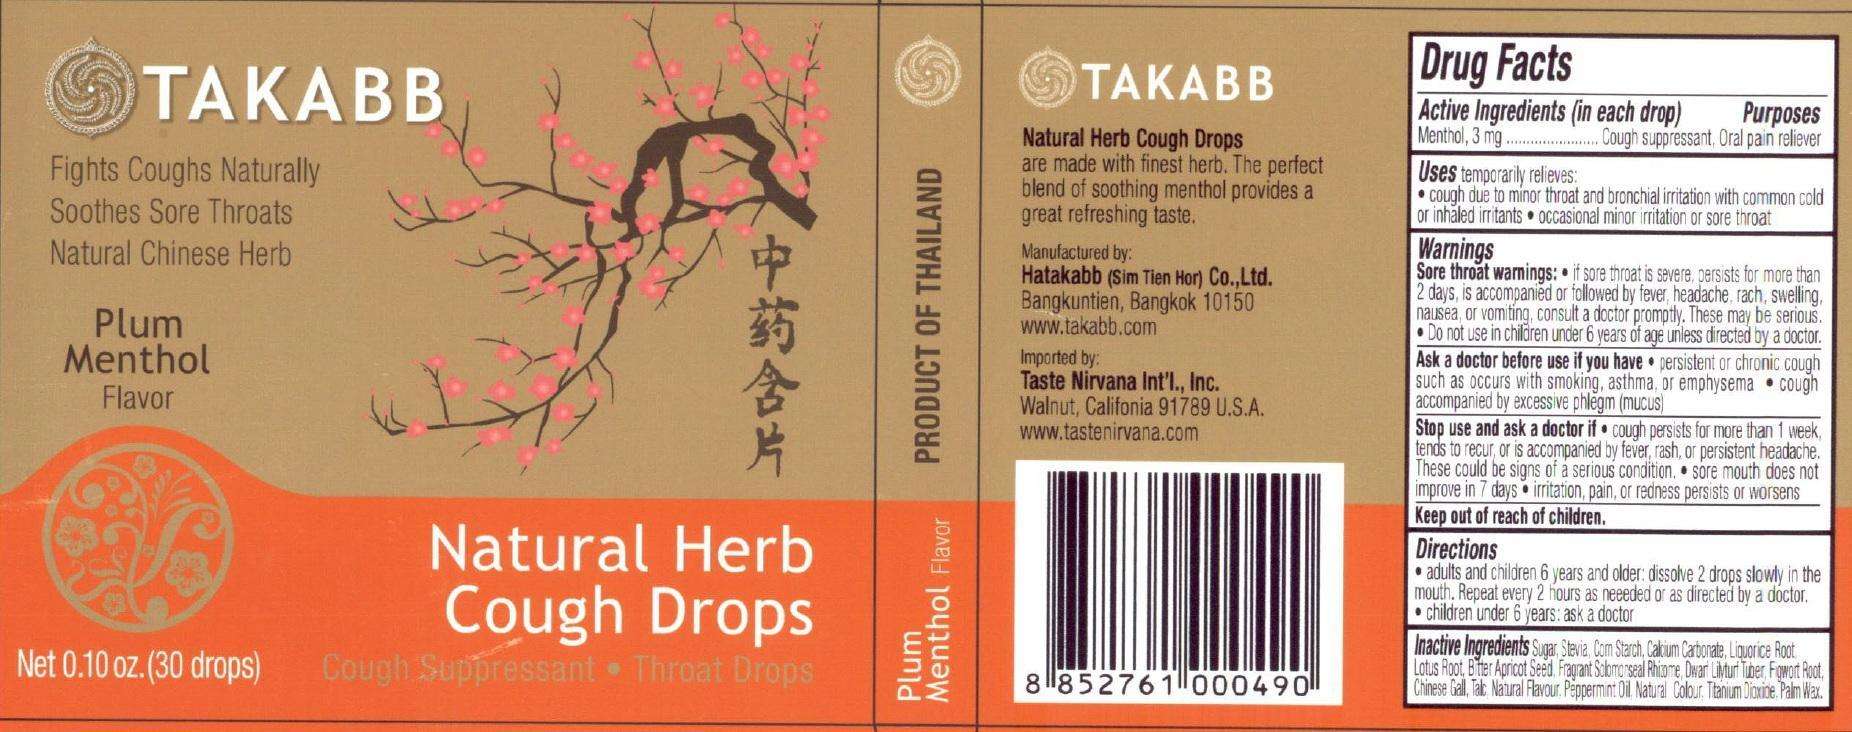 Natural herb